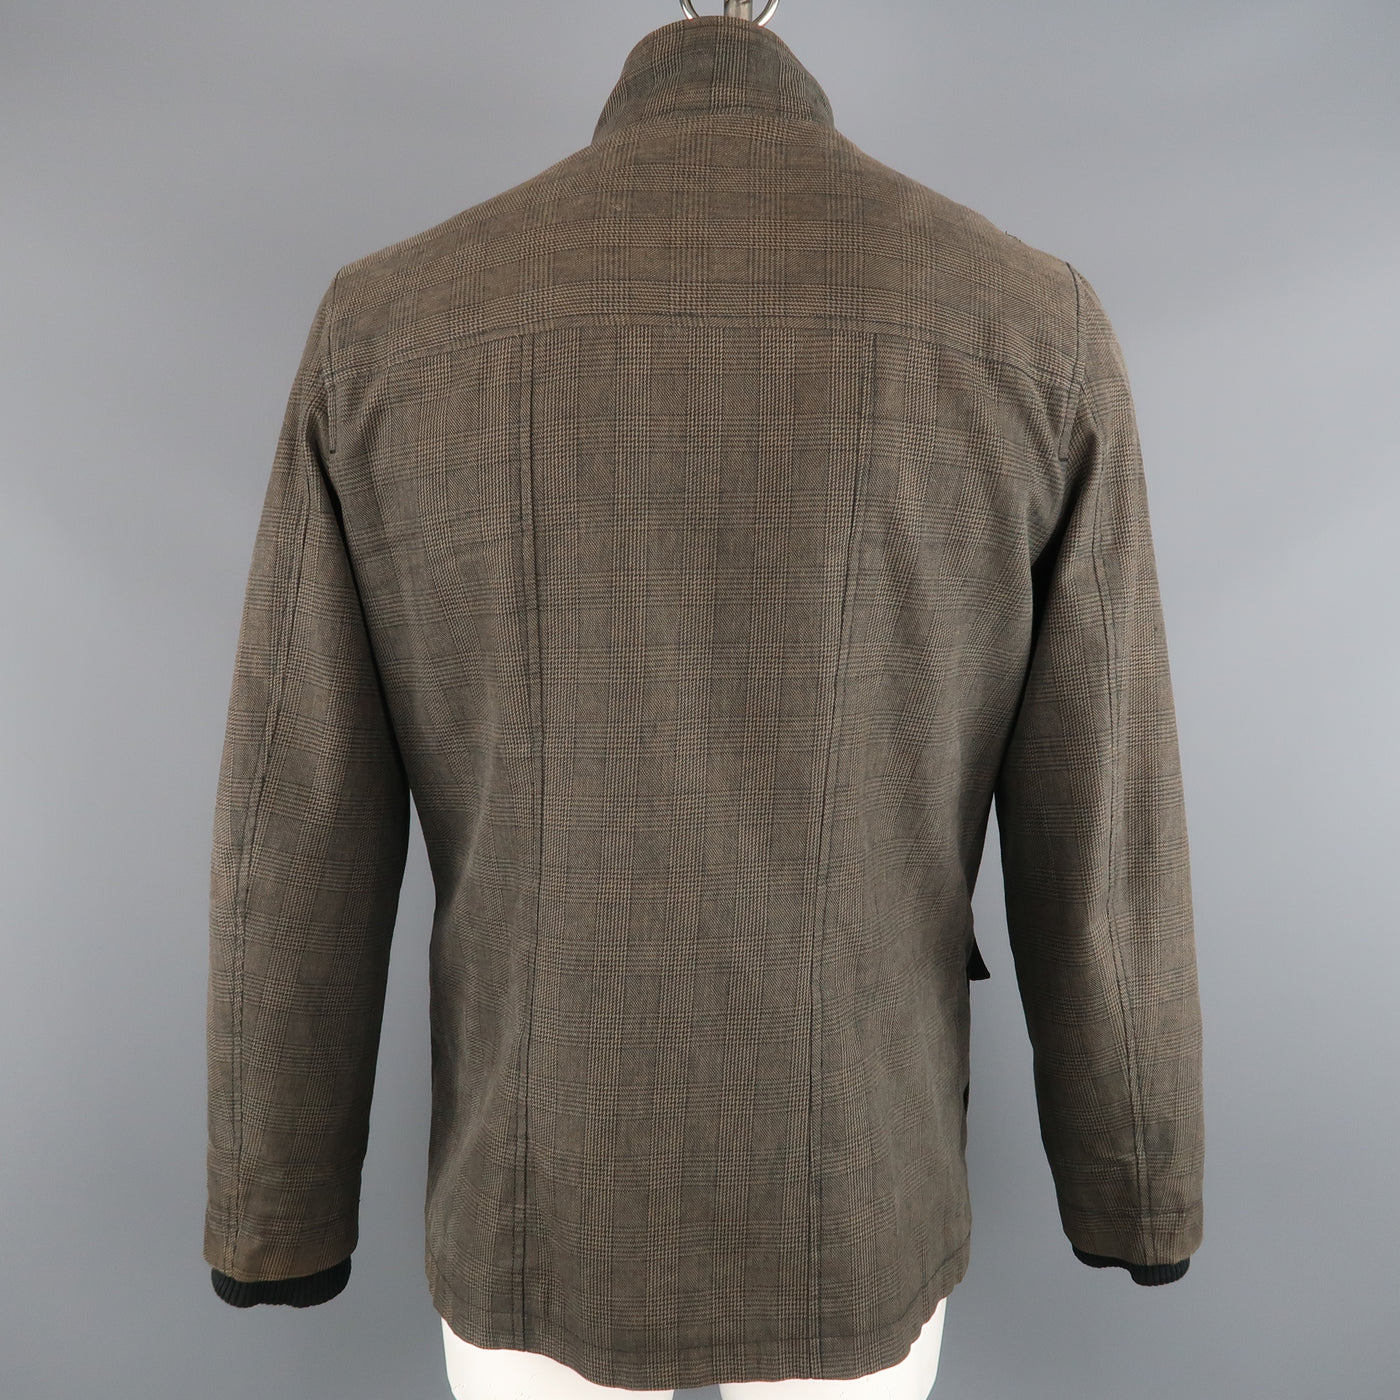 LIFE / AFTER / DENIM Chest Size M Olive Glenplaid Cotton Zip & Snaps Jacket